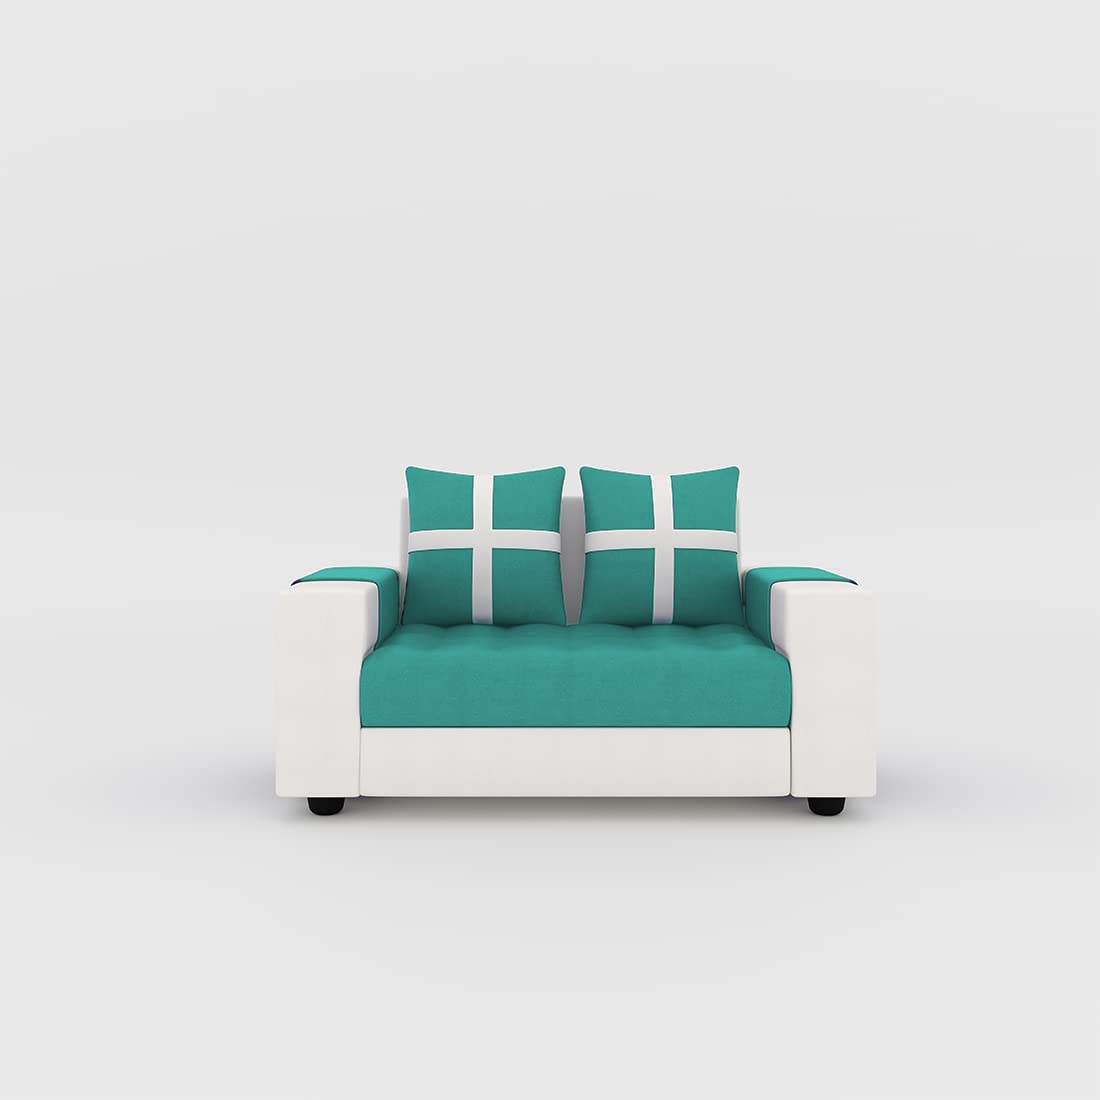 Torque India Jamestown 2 Seater Fabric Sofa for Living Room - TorqueIndia